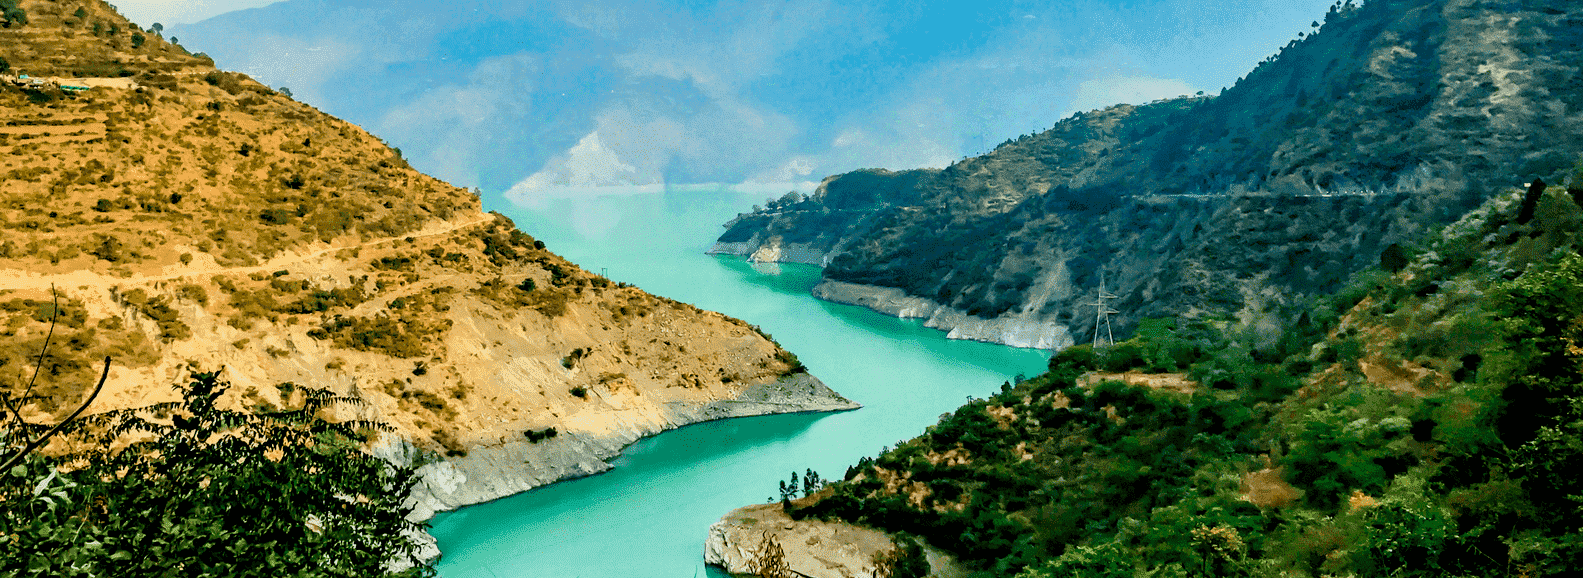 Tehri dam reservoir in Chamba Uttarakhand is one of the best places for Chamba sightseeing in Uttarakhand